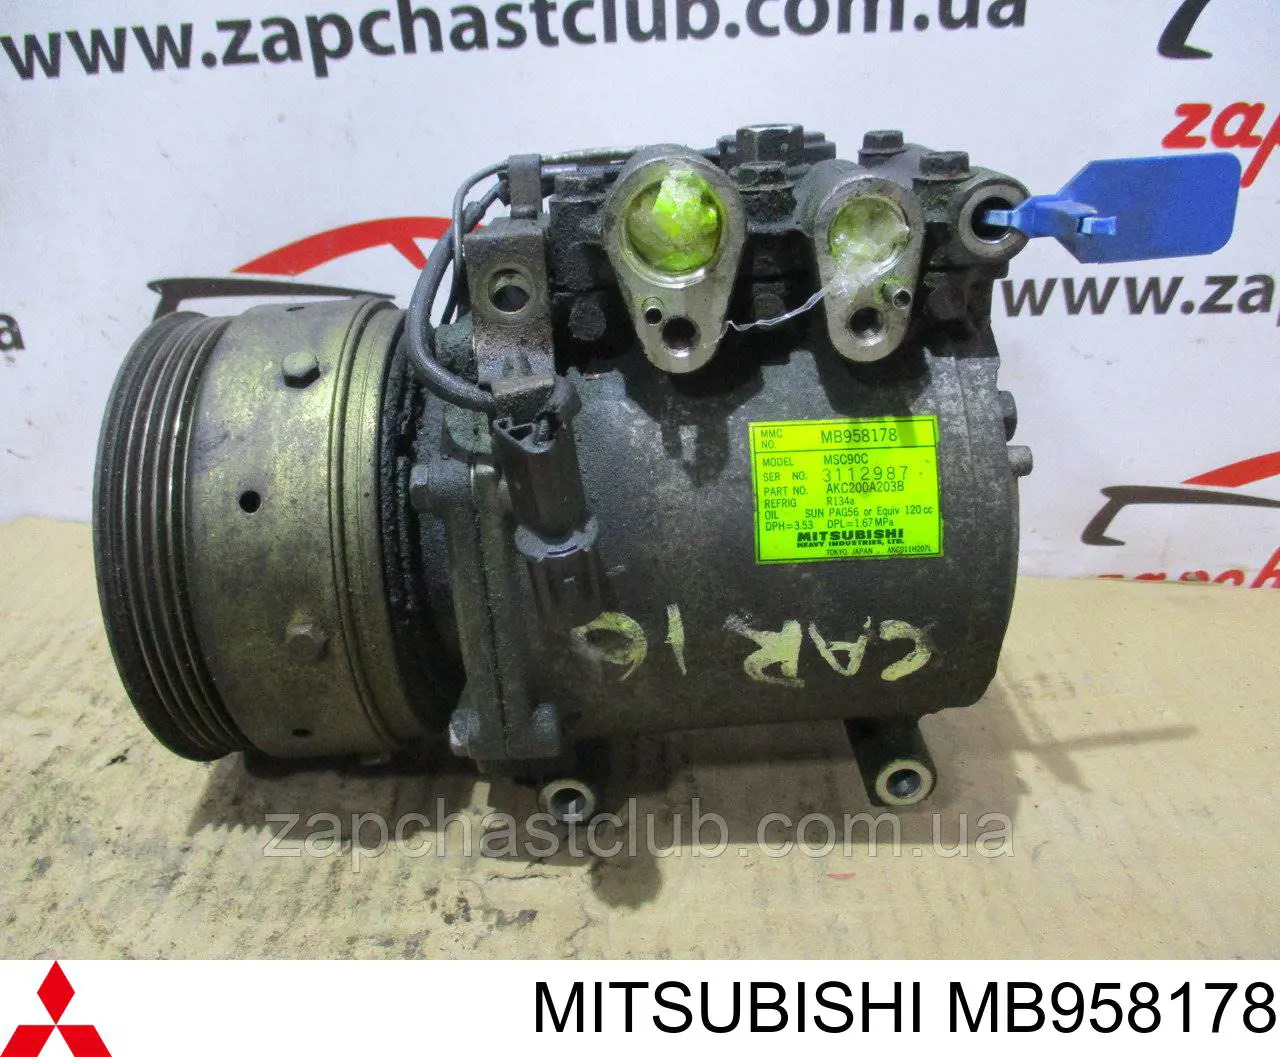 MB958178 Mitsubishi compresor de aire acondicionado